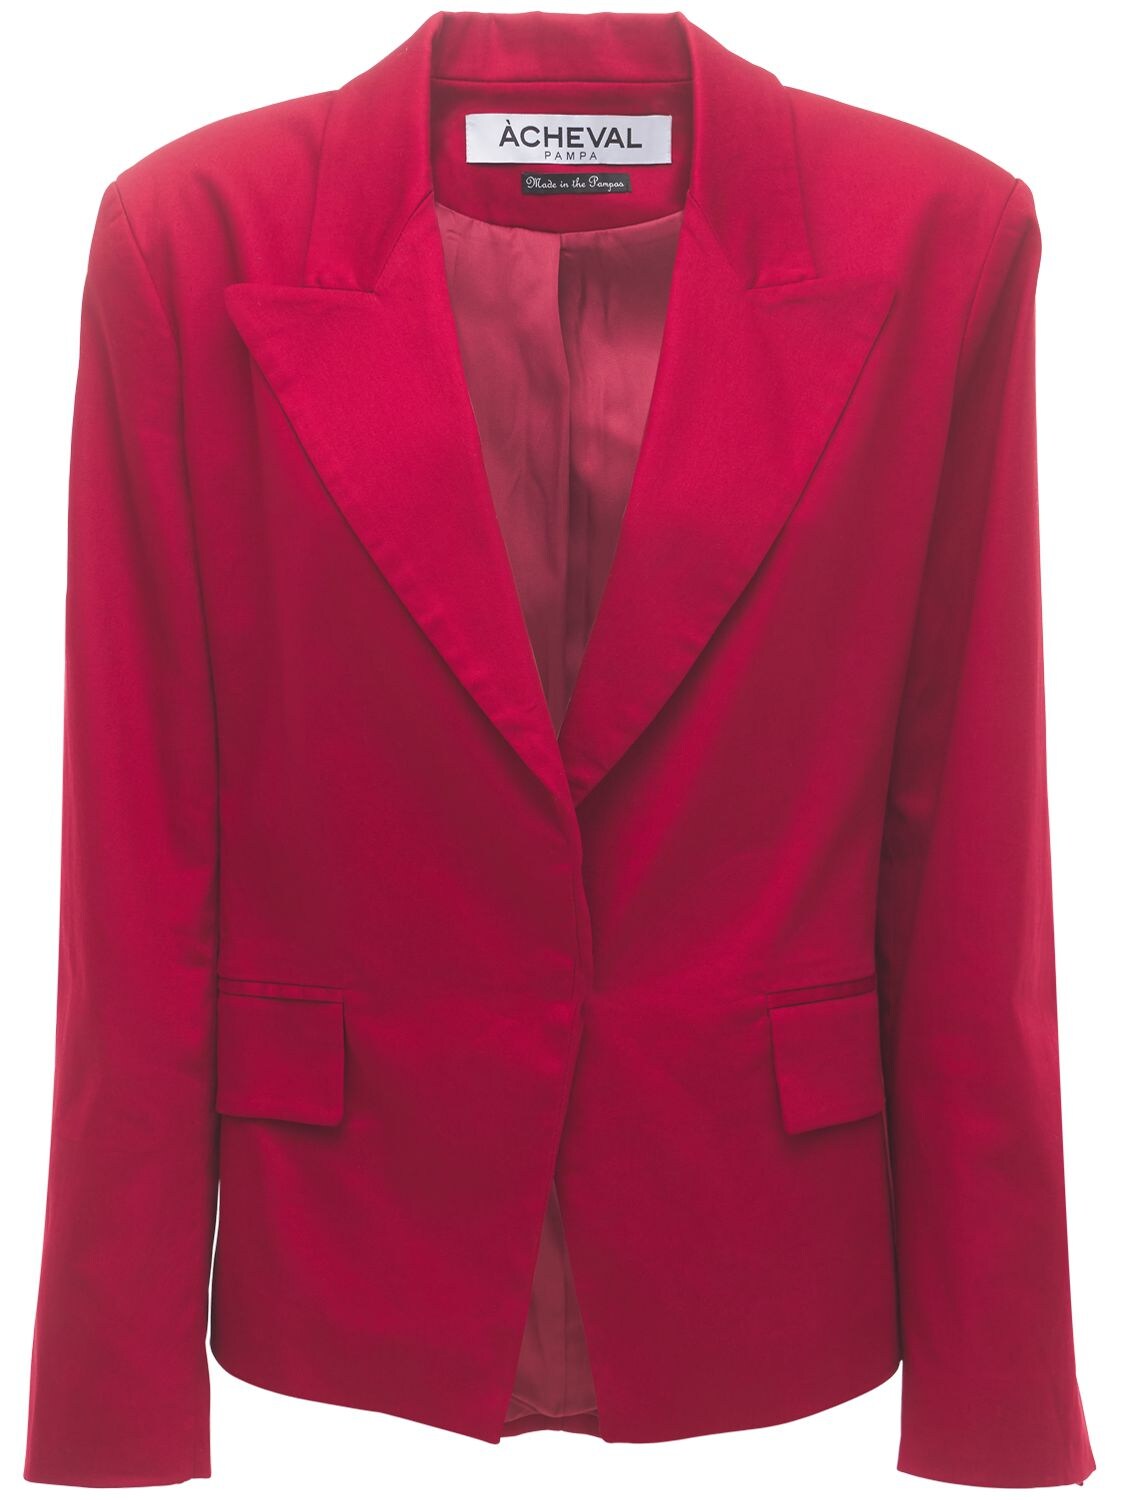 Acheval Pampa Gardel Cotton Satin Suit Jacket In Red